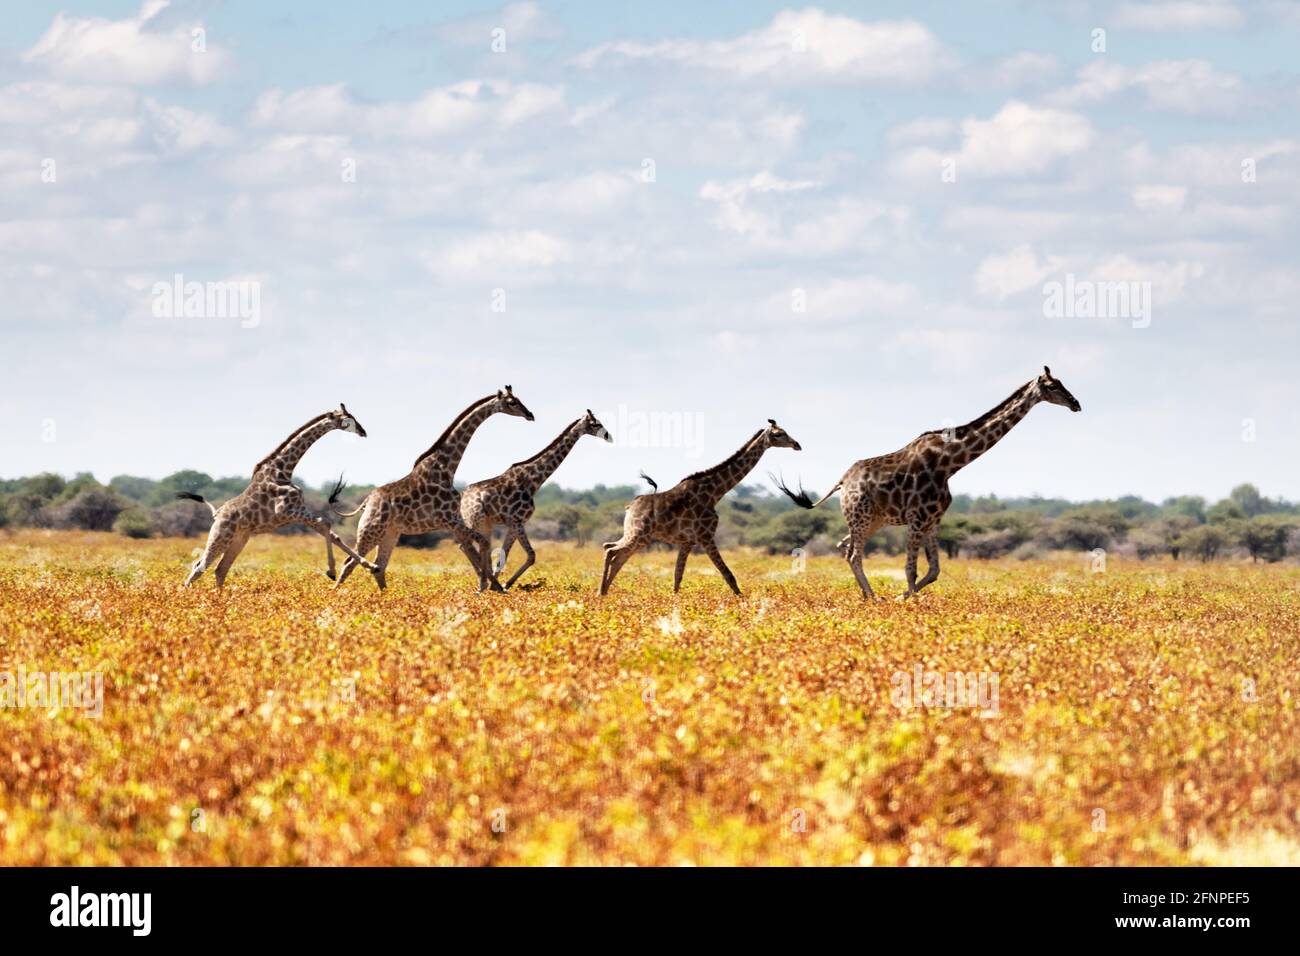 Giraffe family in dried yellow grass of african savanna Stock Photo